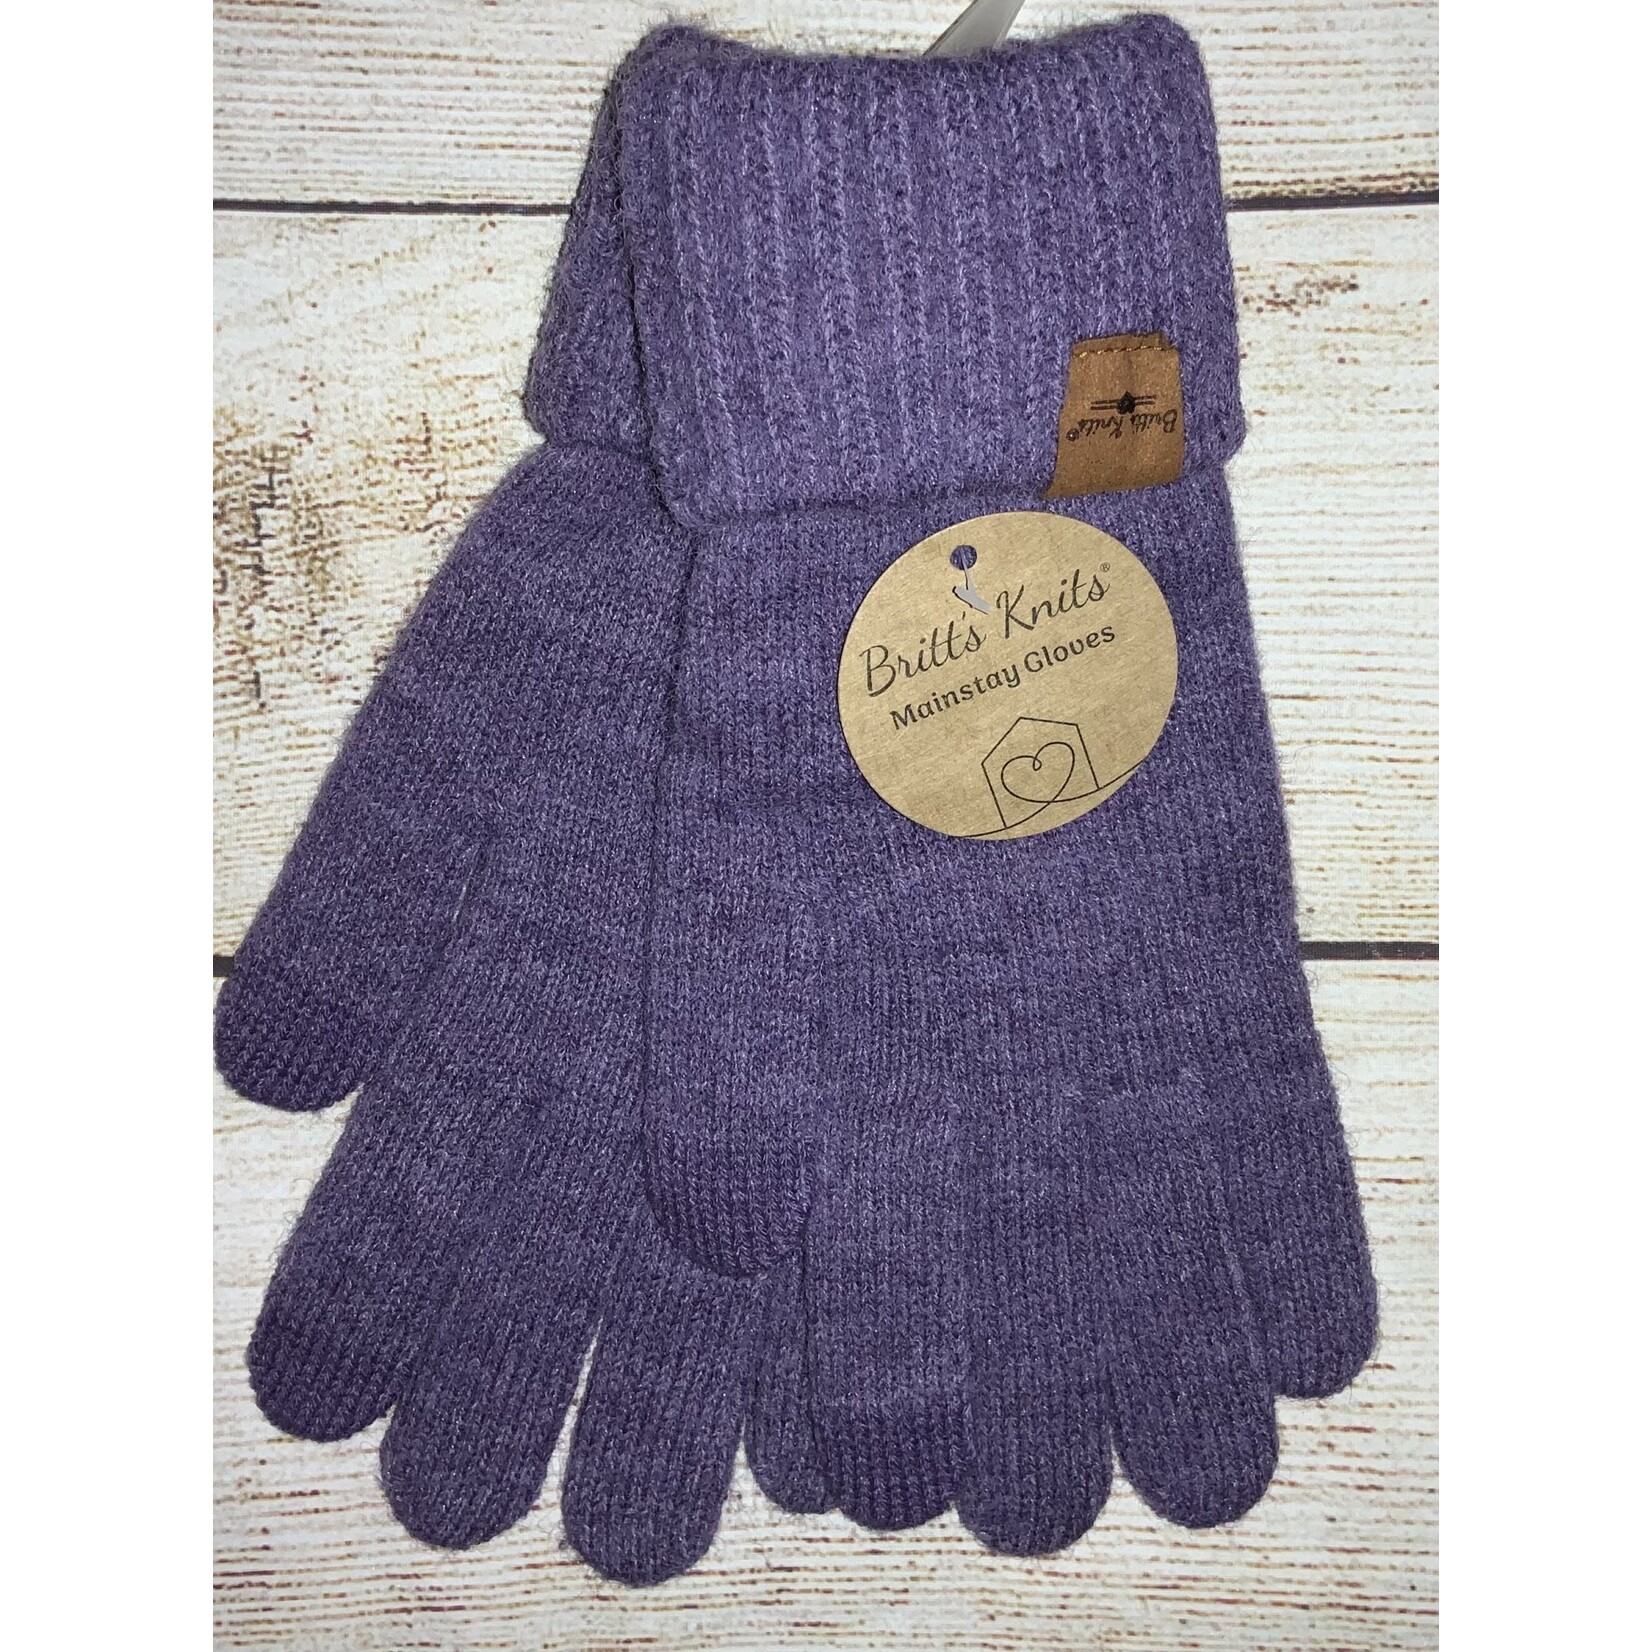 Britt's Knits Britt’s Knits Mainstay Gloves Purple